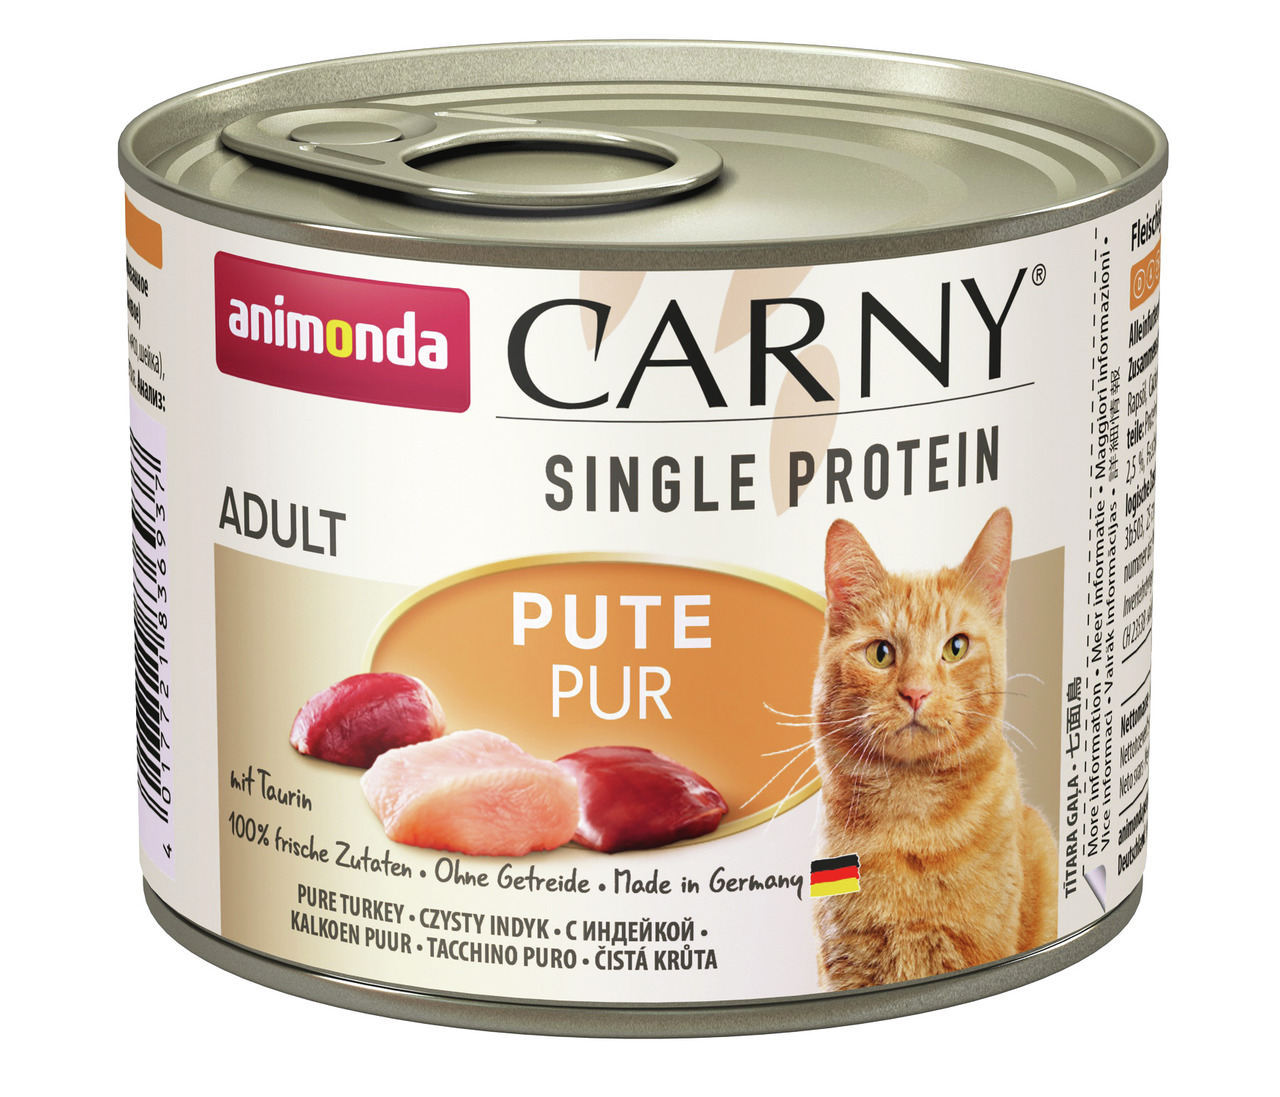 Animonda Carny Single Protein Adult Pute Pur Katzen Nassfutter 200 g